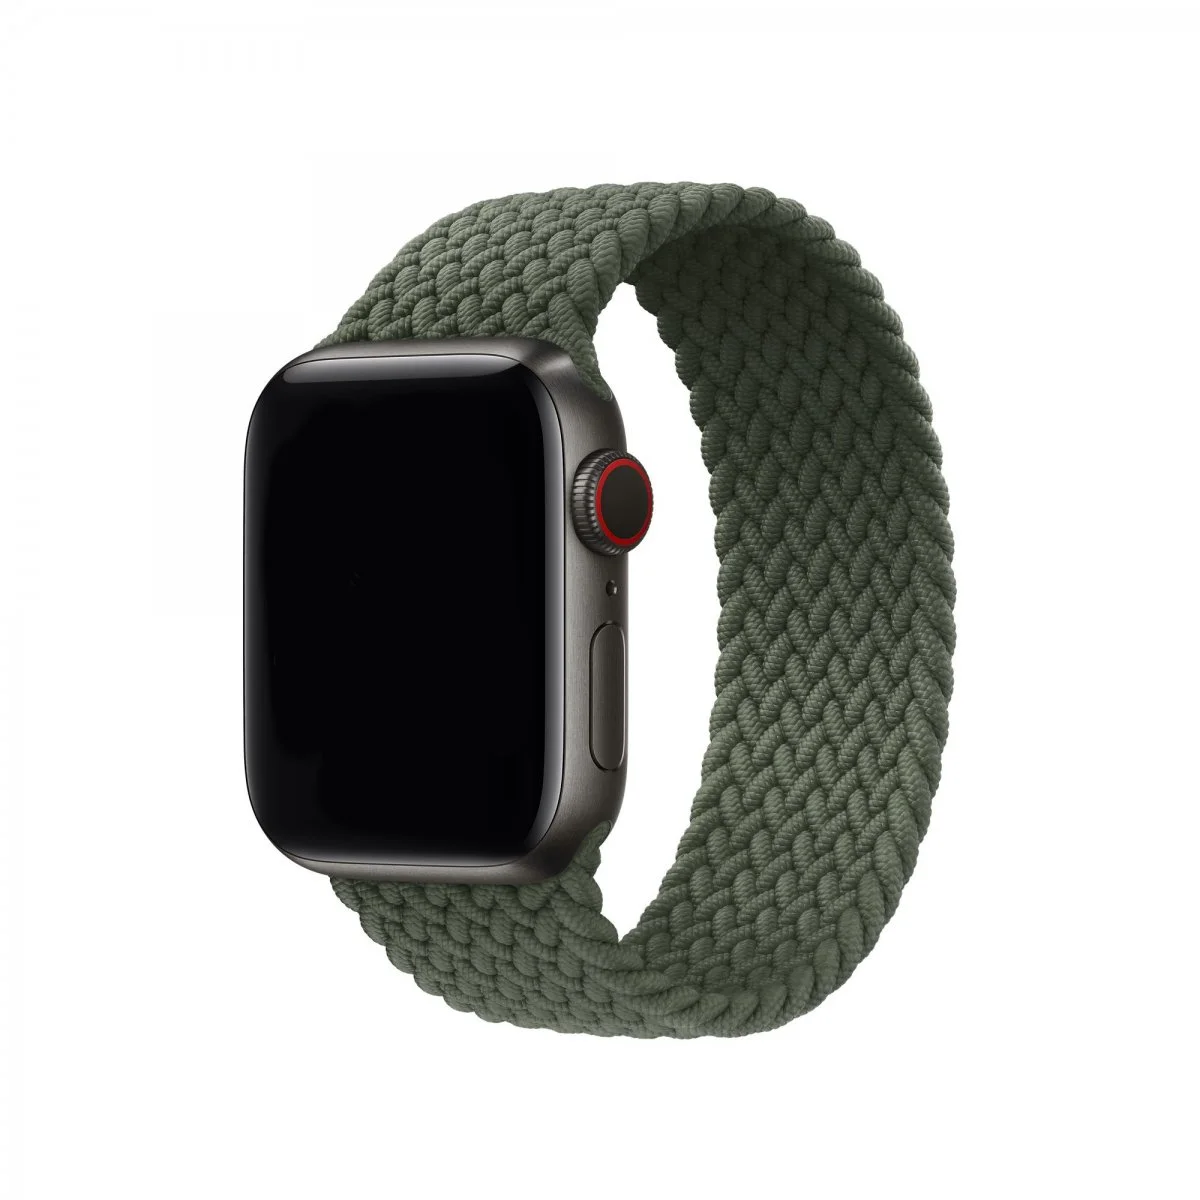 Řemínek iMore Braided Solo Loop Apple Watch Series 1/2/3 42mm - tmavě zelený (M)